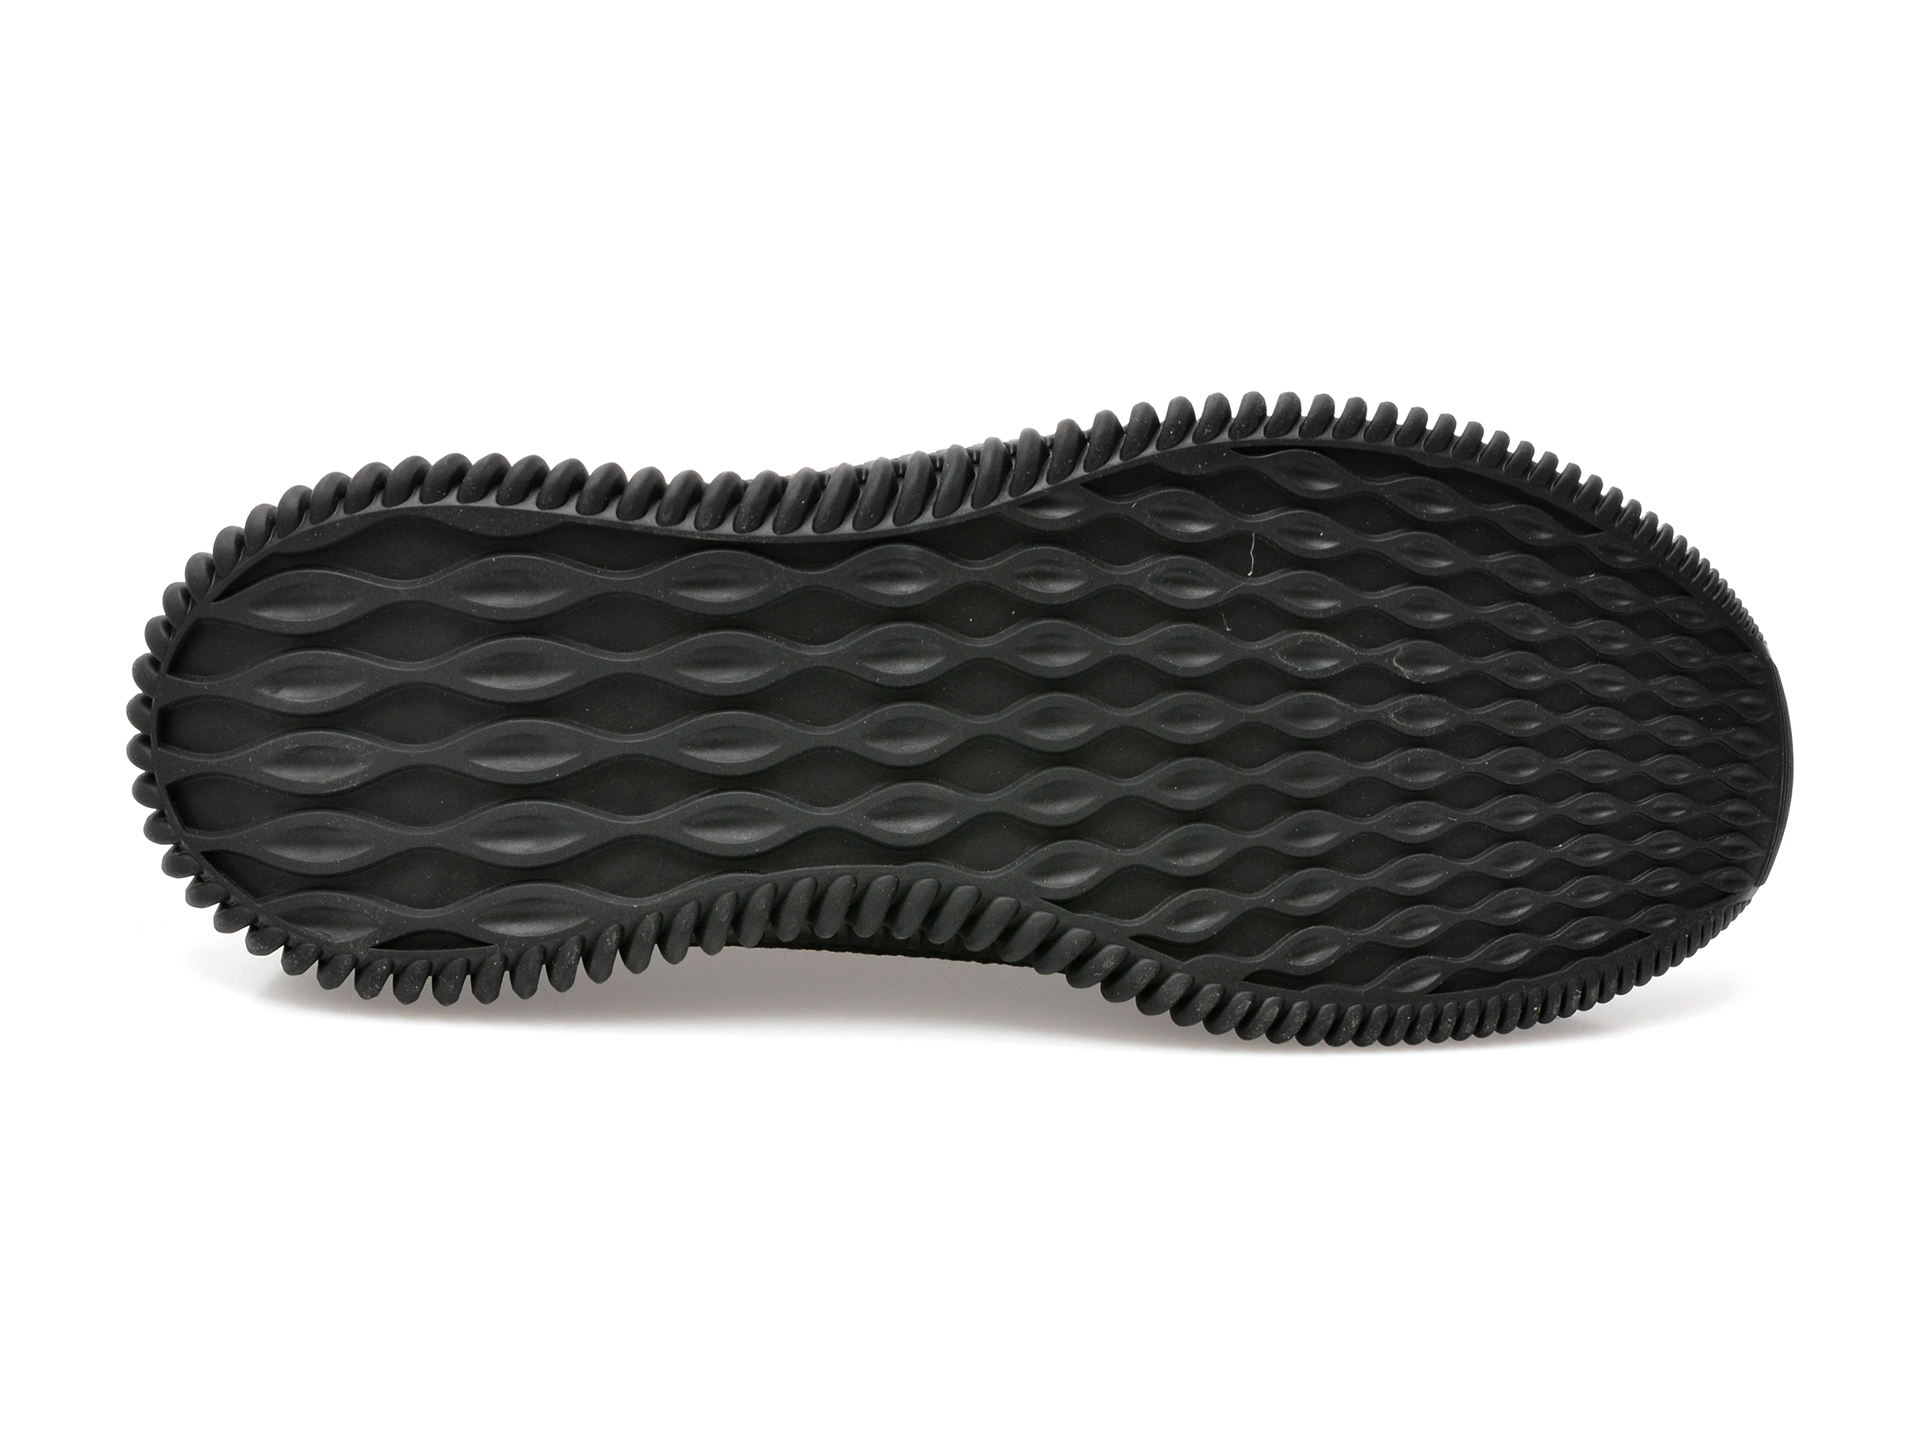 Poze Pantofi sport ALDO negri, GILGAI001, din material textil tezyo.ro